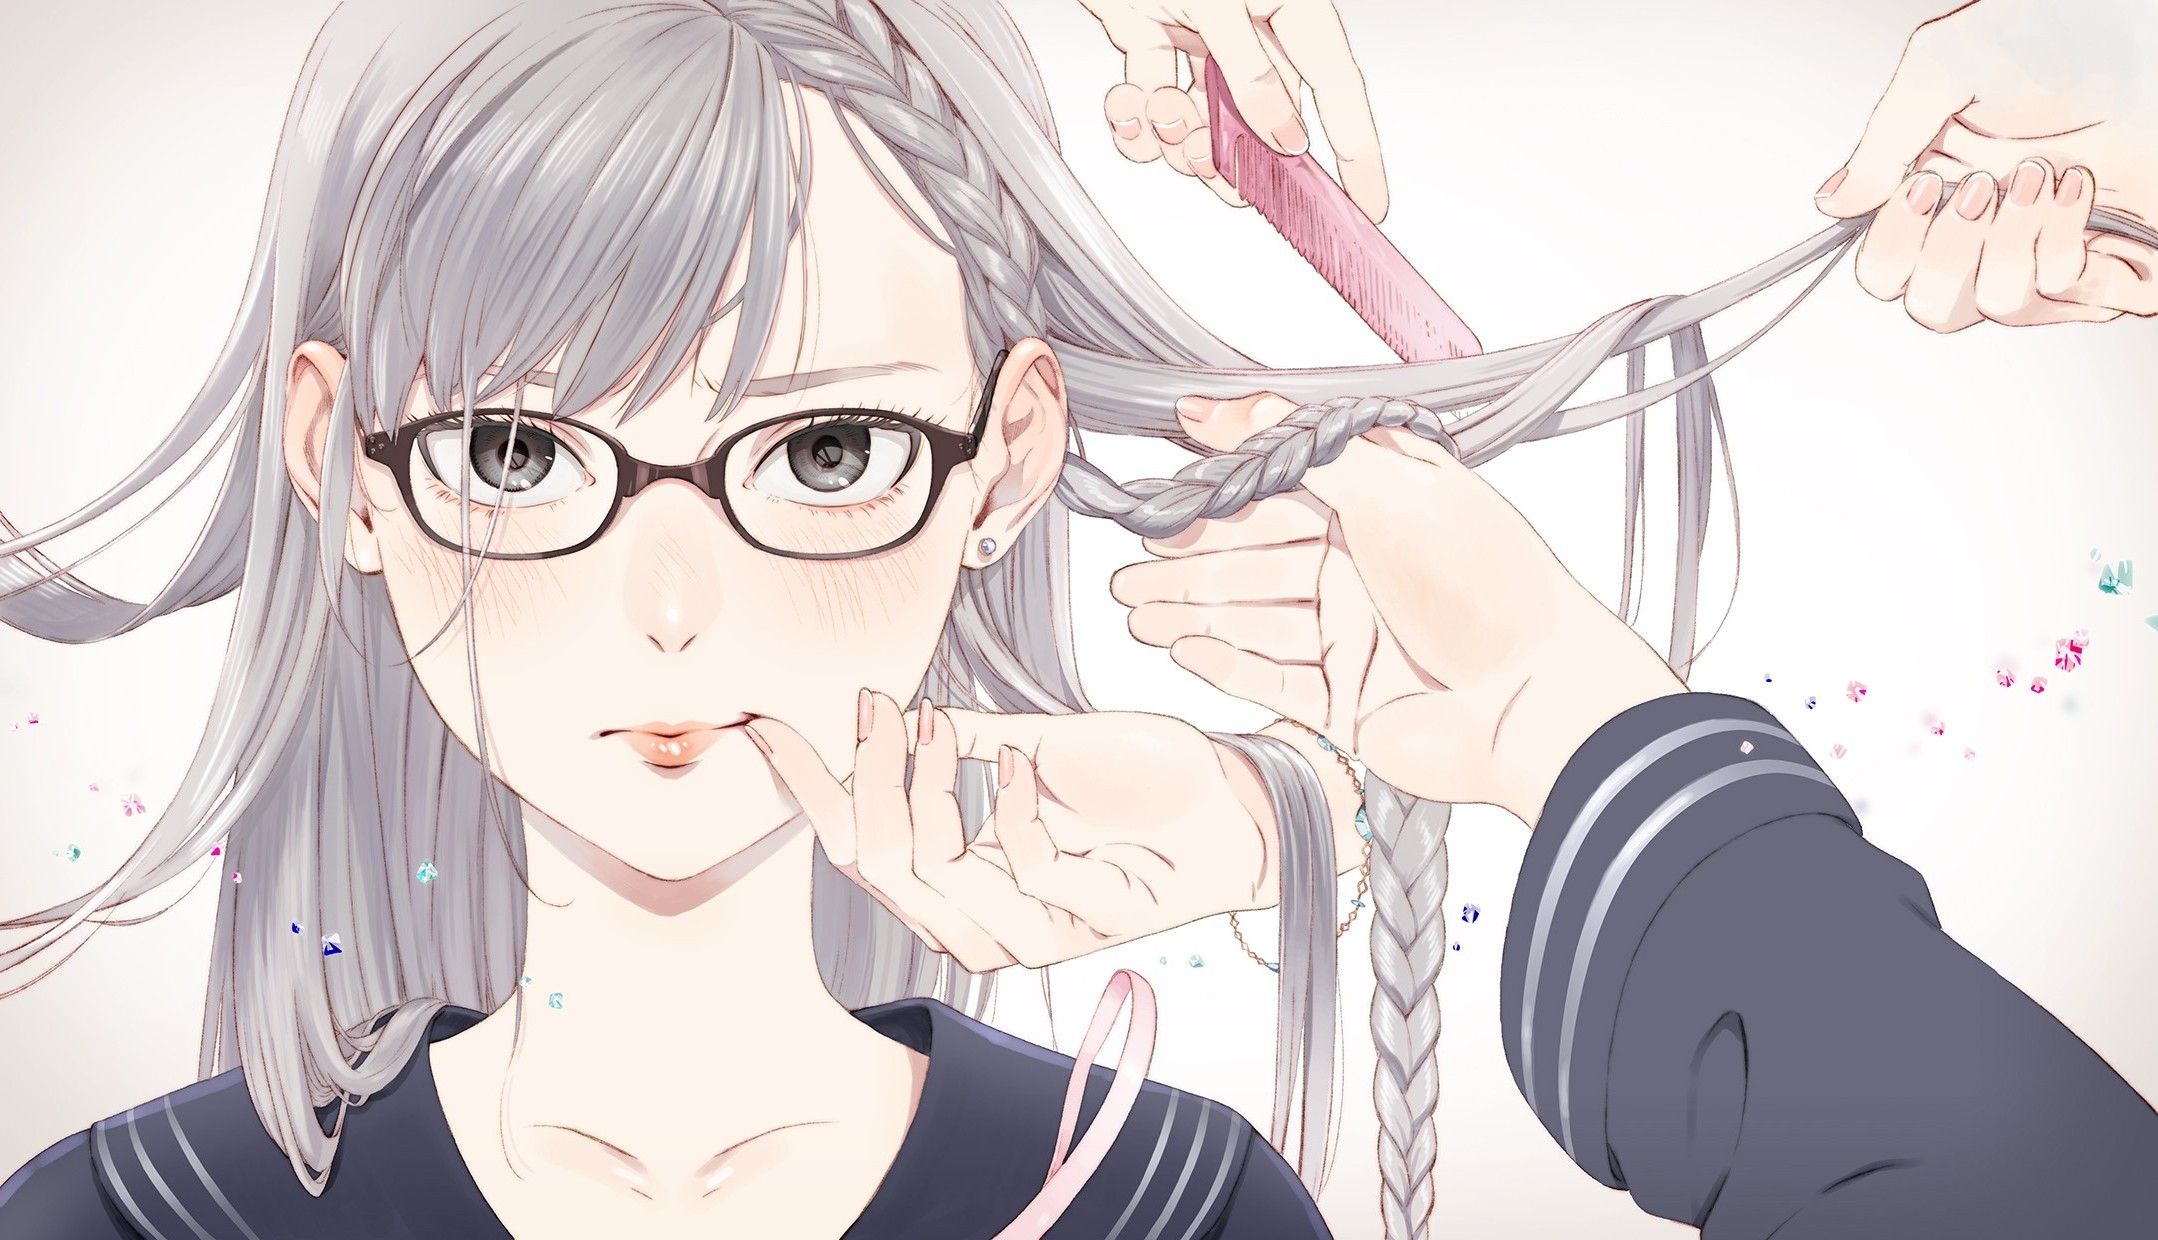 braids, Original Characters, Anime, Anime Girls, Glasses